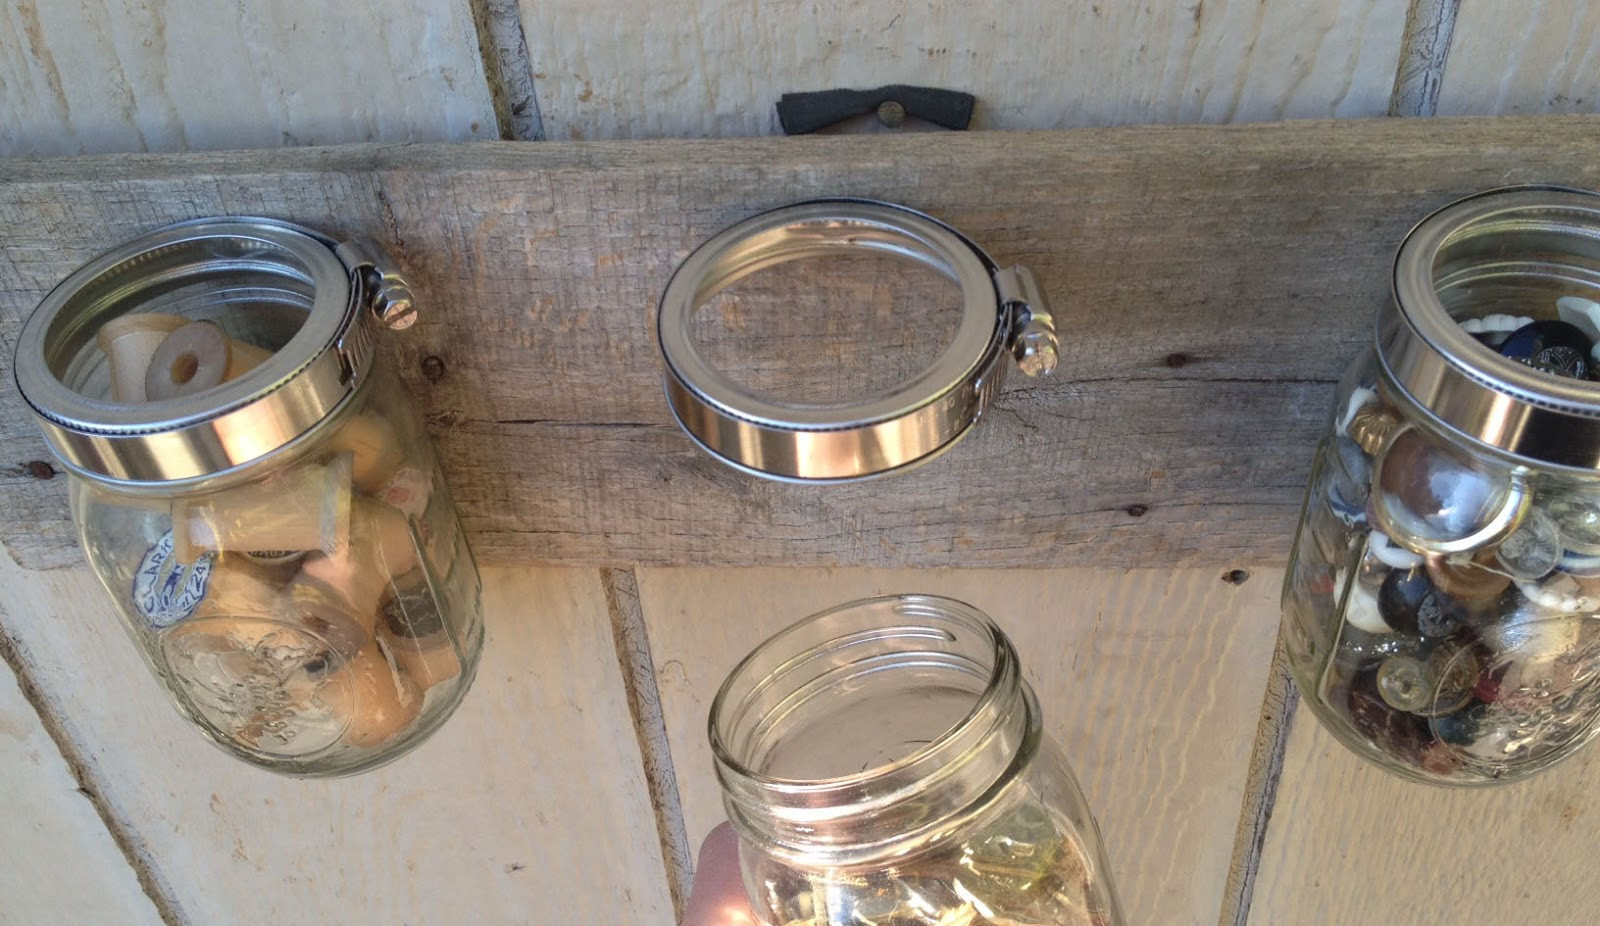 Best ideas about DIY Mason Jar Organizer
. Save or Pin Get Rich or DIY Tryin Mason Jar Organizer Now.